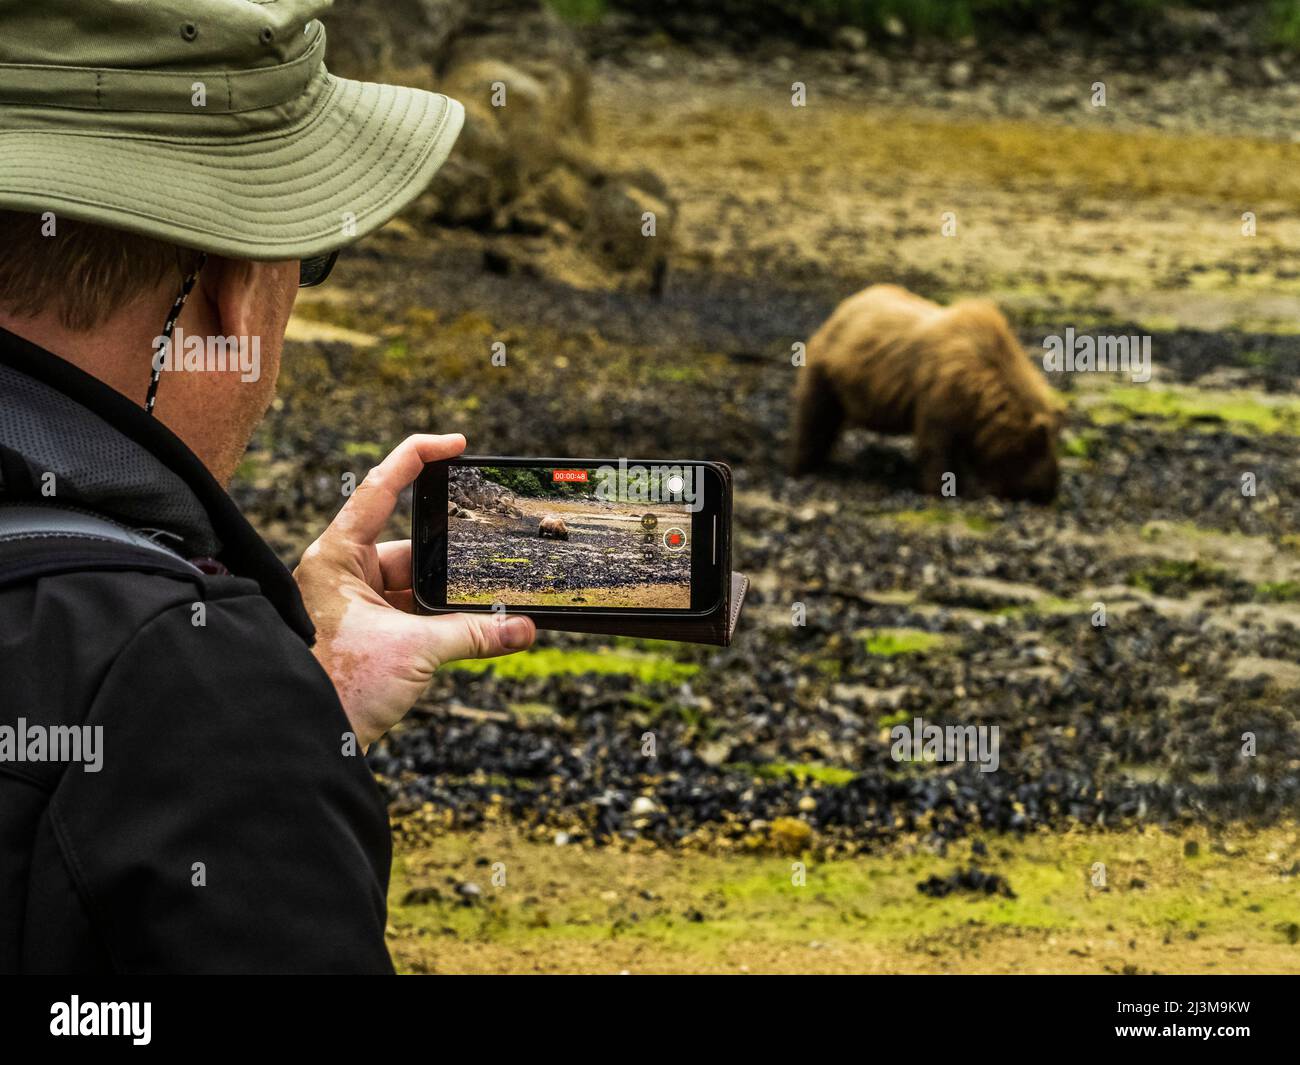 Man holding a smart phone photographs a Coastal Brown Bear (Ursus arctos horribilis) digging clams at low tide in Geographic Harbor, Katmai Nationa... Stock Photo